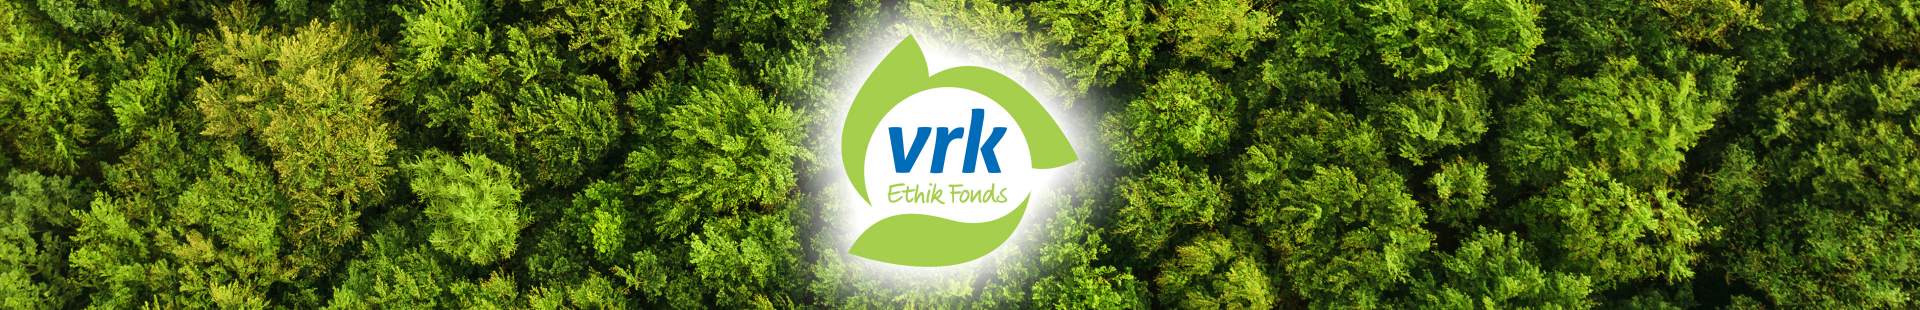 VRK Ethik Fonds Logo